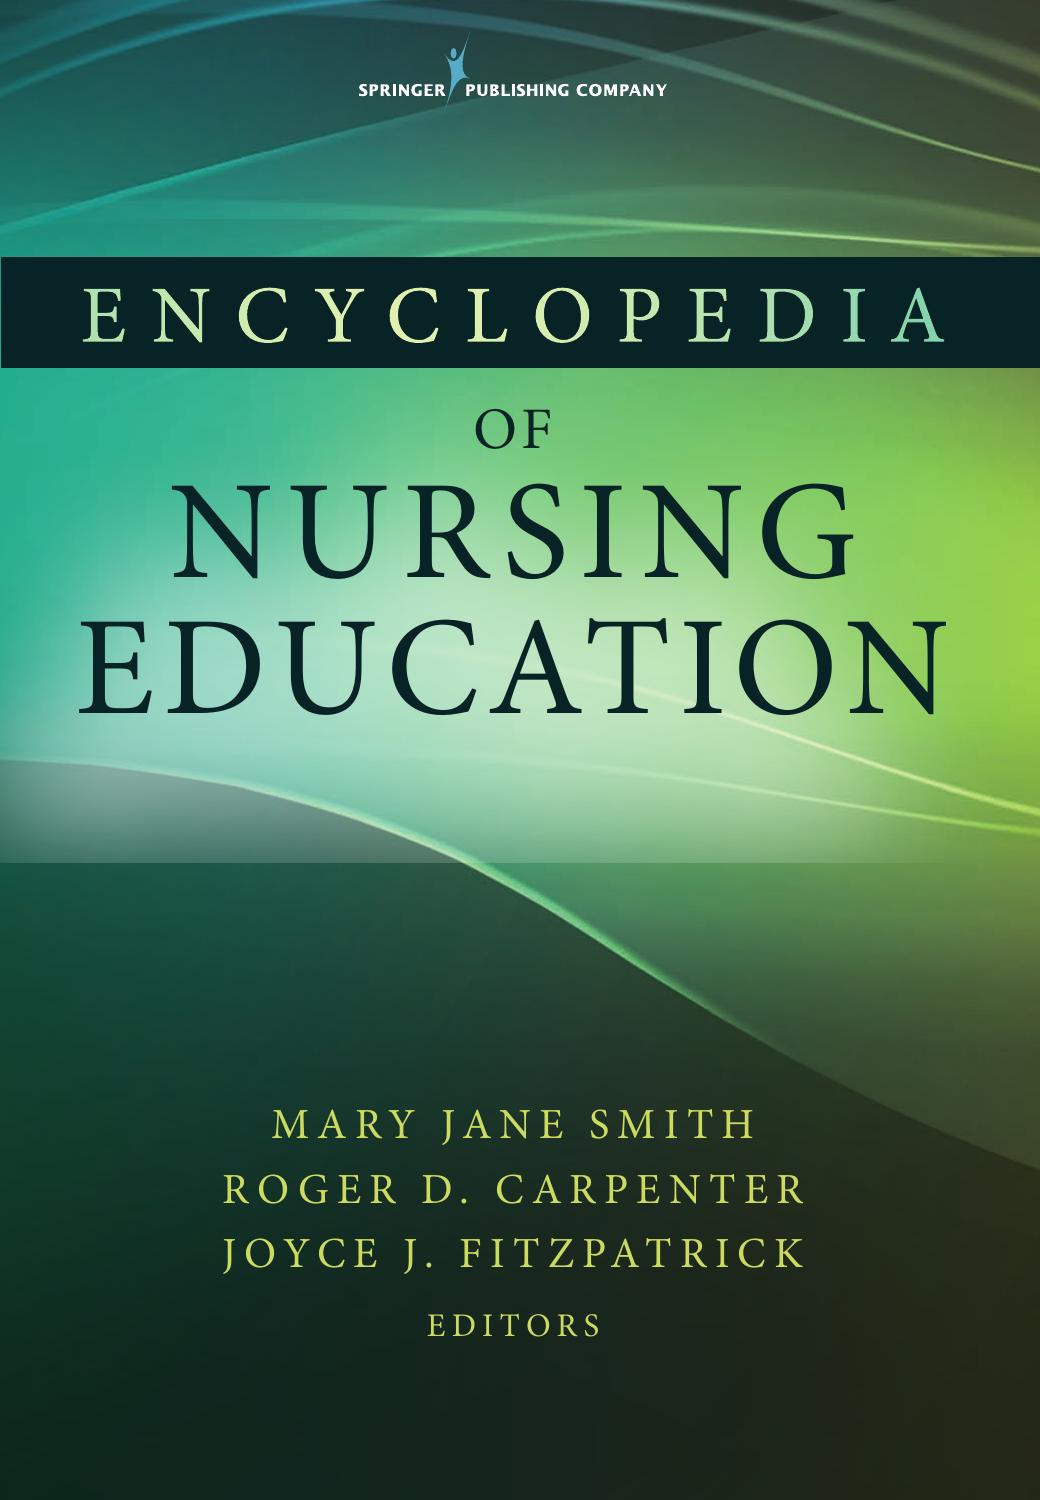 Encyclopedia of Nursing Education